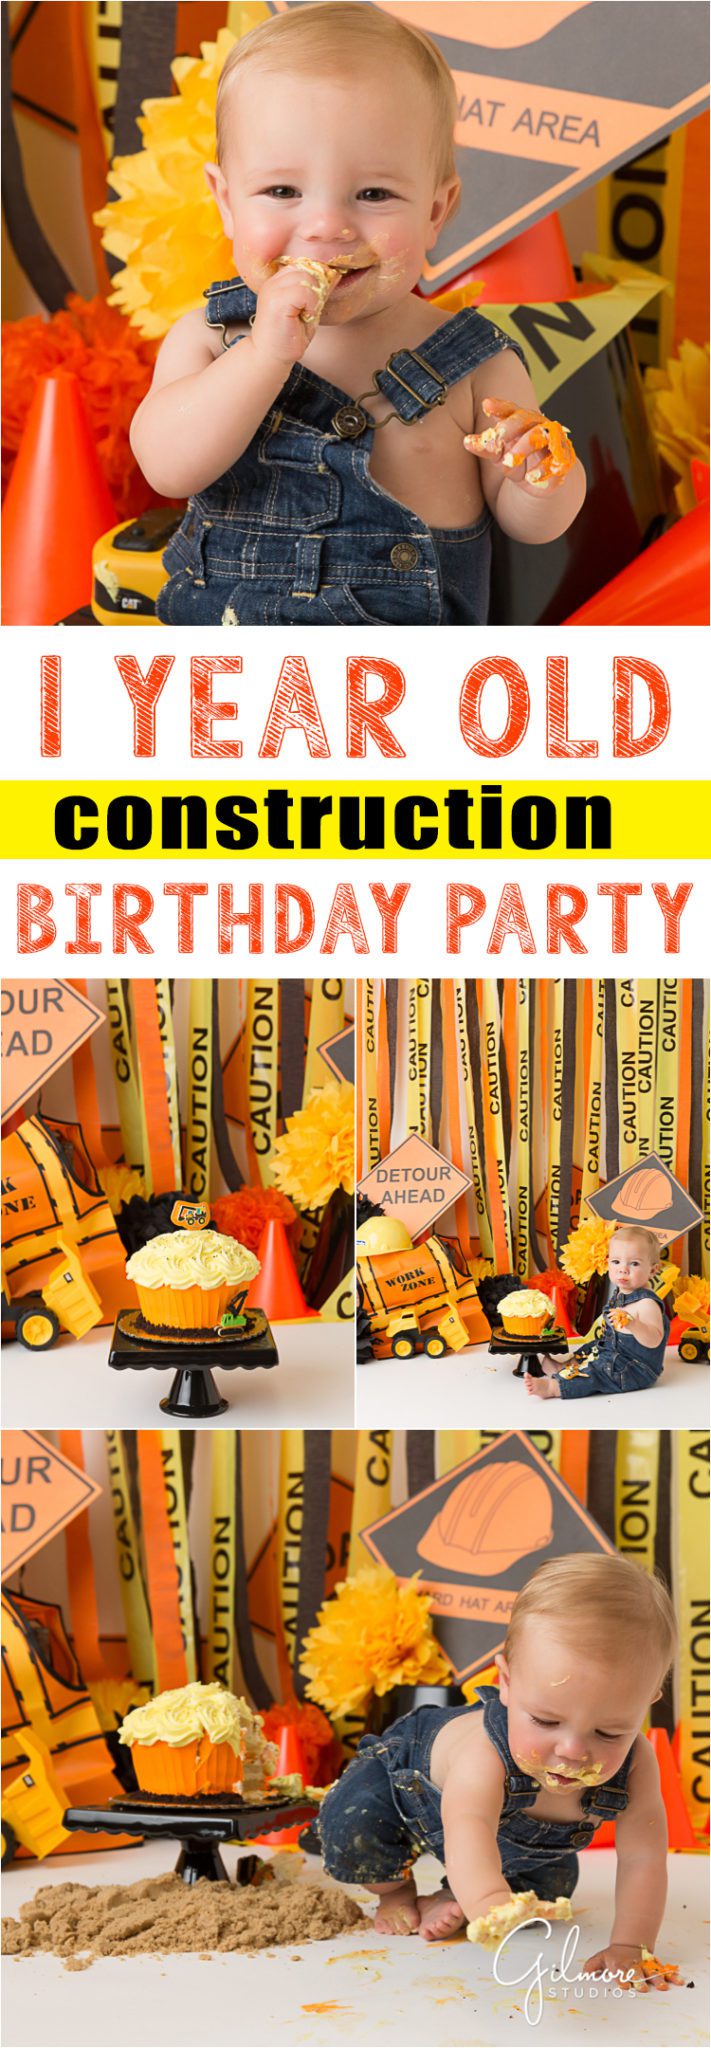 Construction theme birthday party ideas